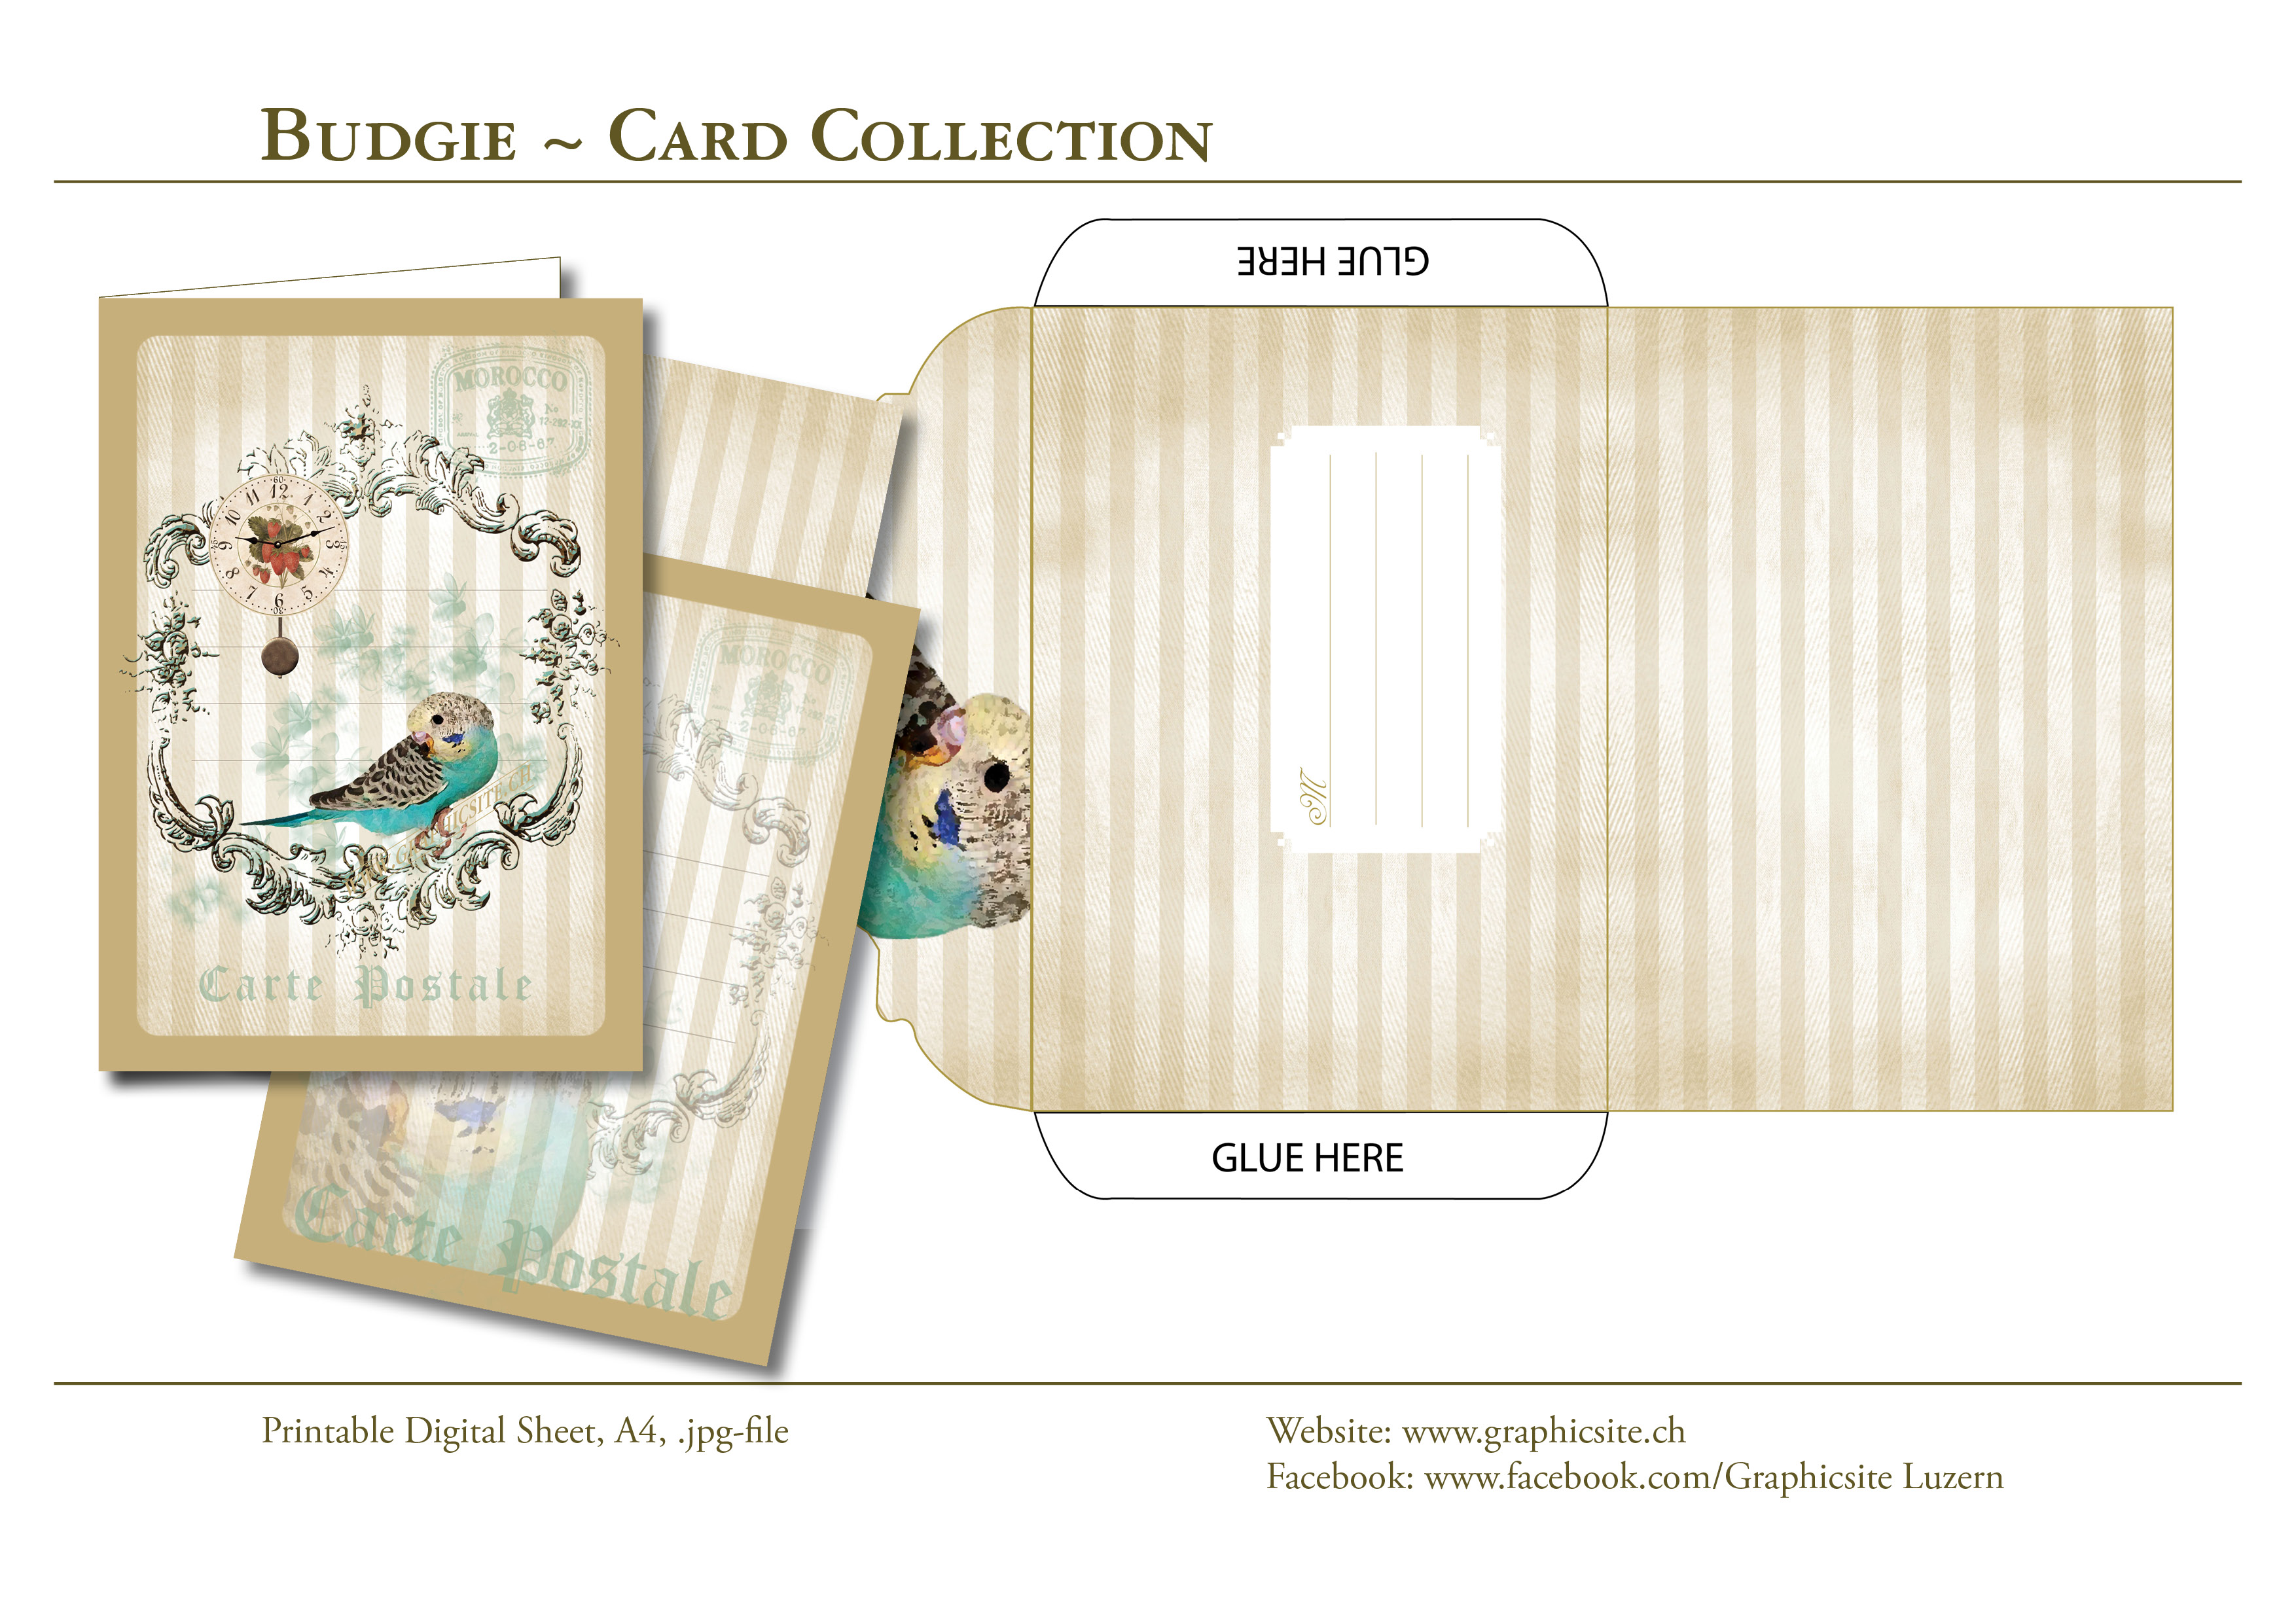 Printable Digital Sheets - DIN A-Formats - Budgie Card Collection - Vintage, cards, birds, ornamental, stripes, clock, greetingcards, envelope, graphic design luzern, Schweiz